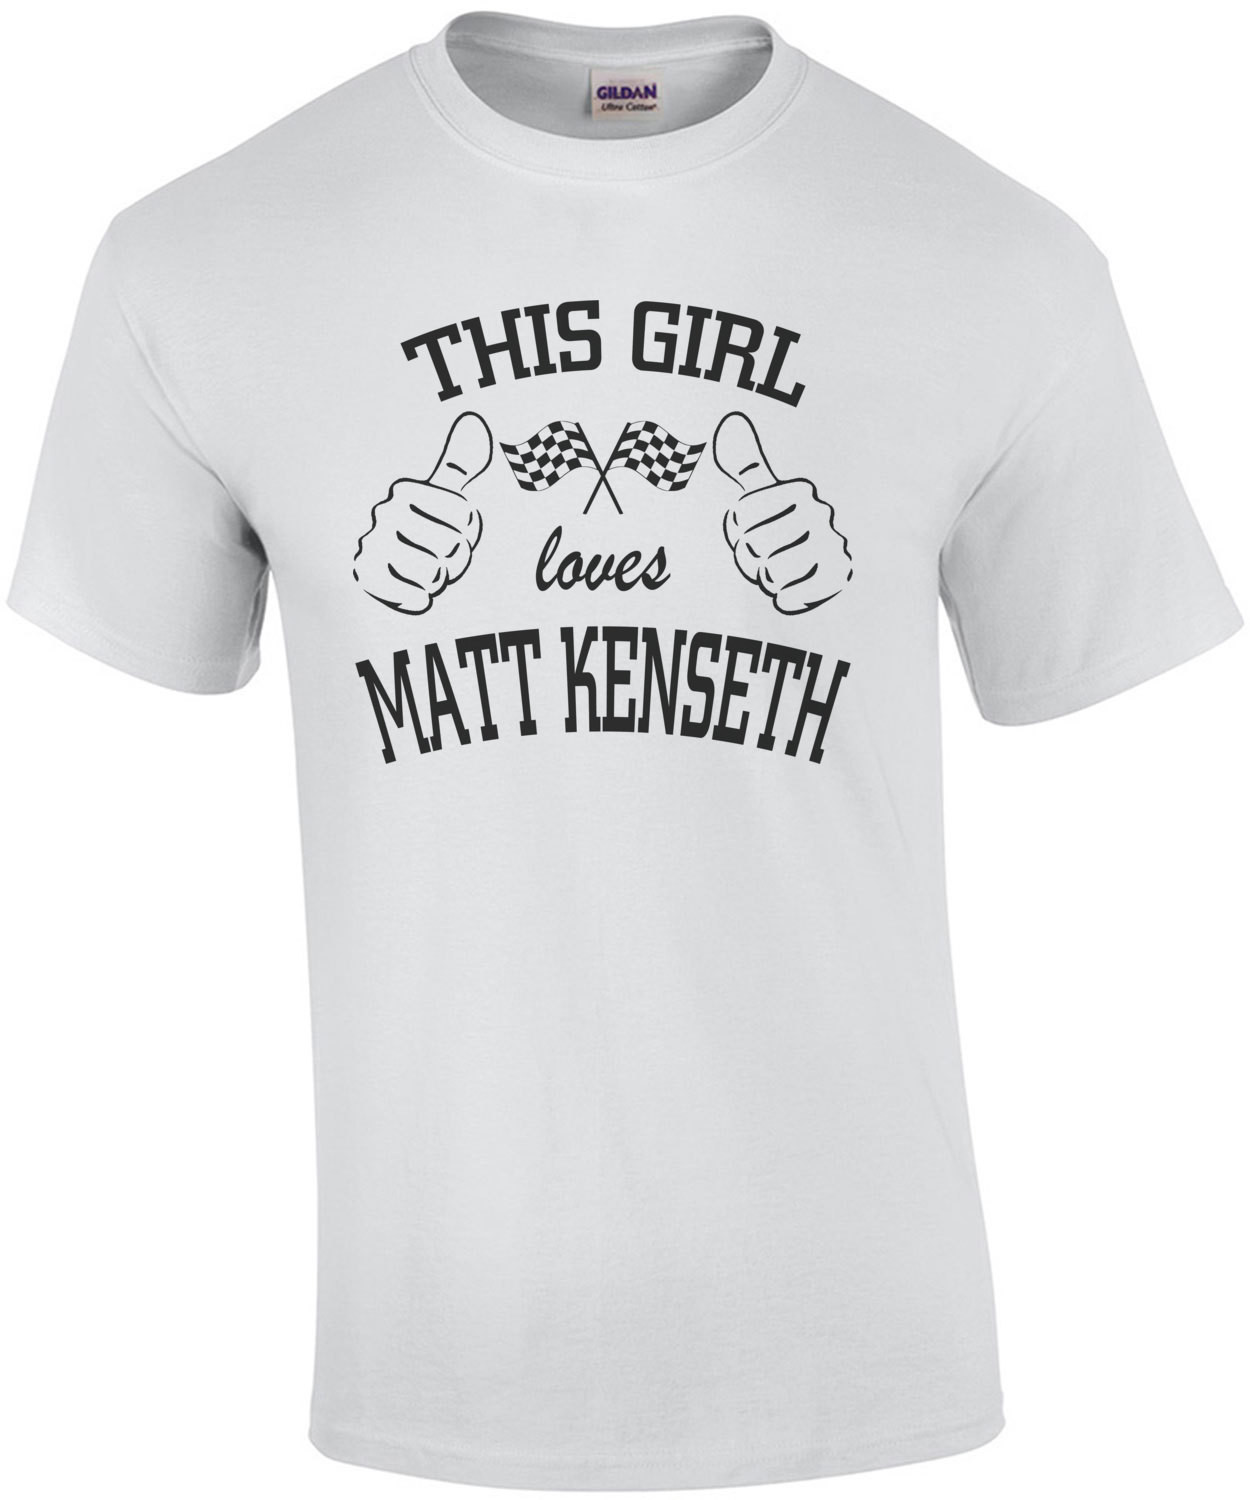 This Girl Loves Matt Kenseth T-Shirt